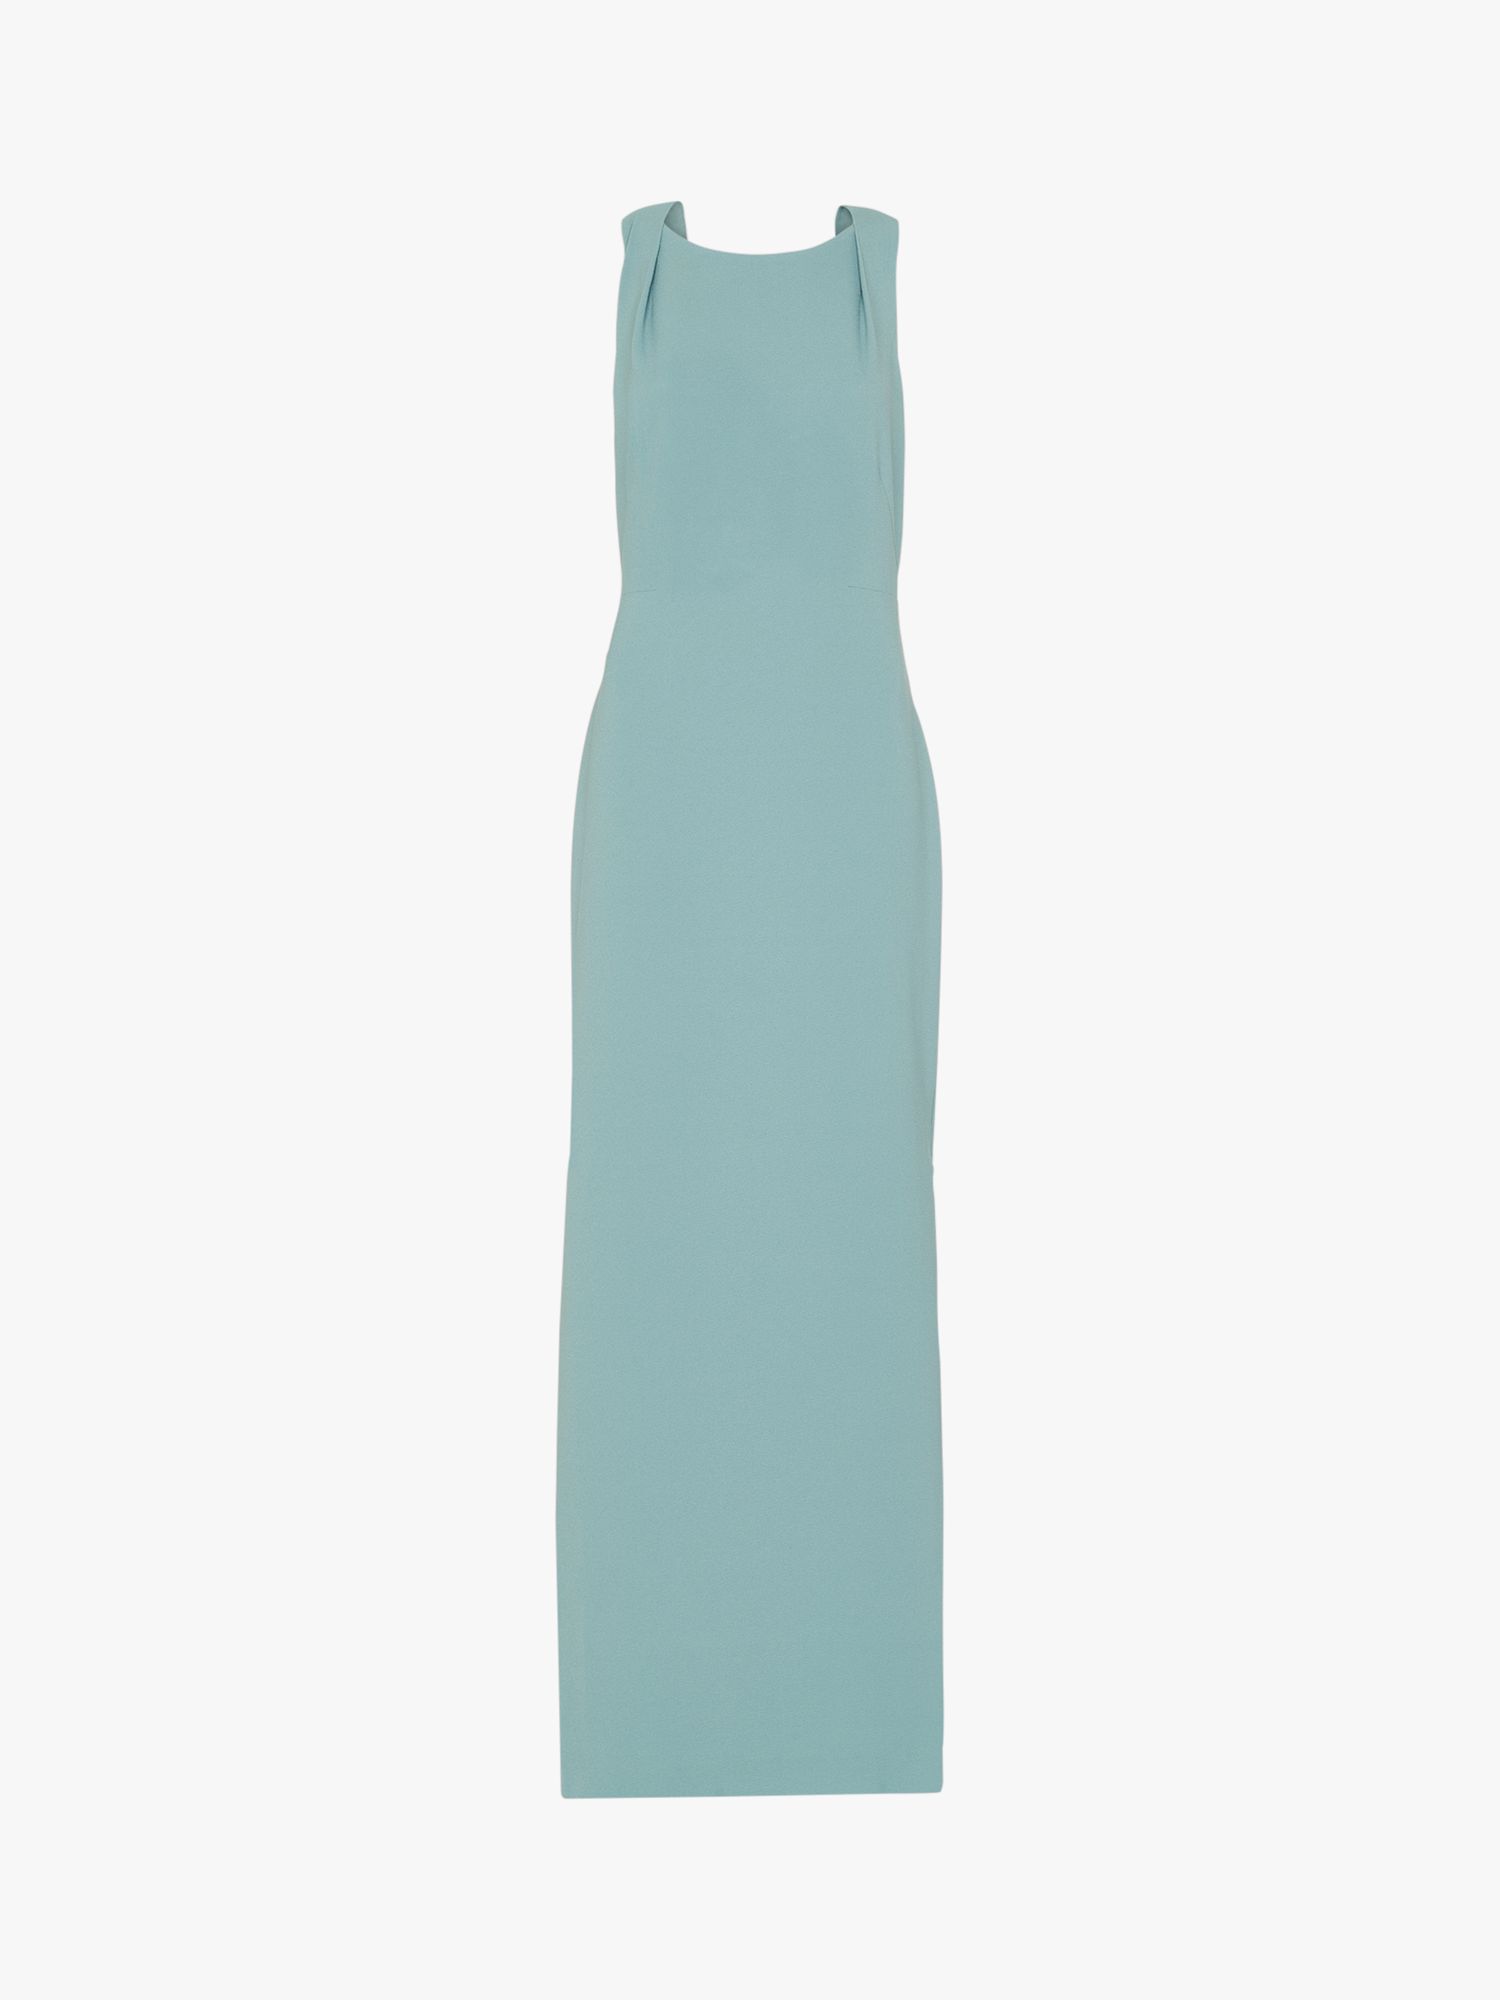 Whistles Tie Back Maxi Dress, Sage Green at John Lewis & Partners